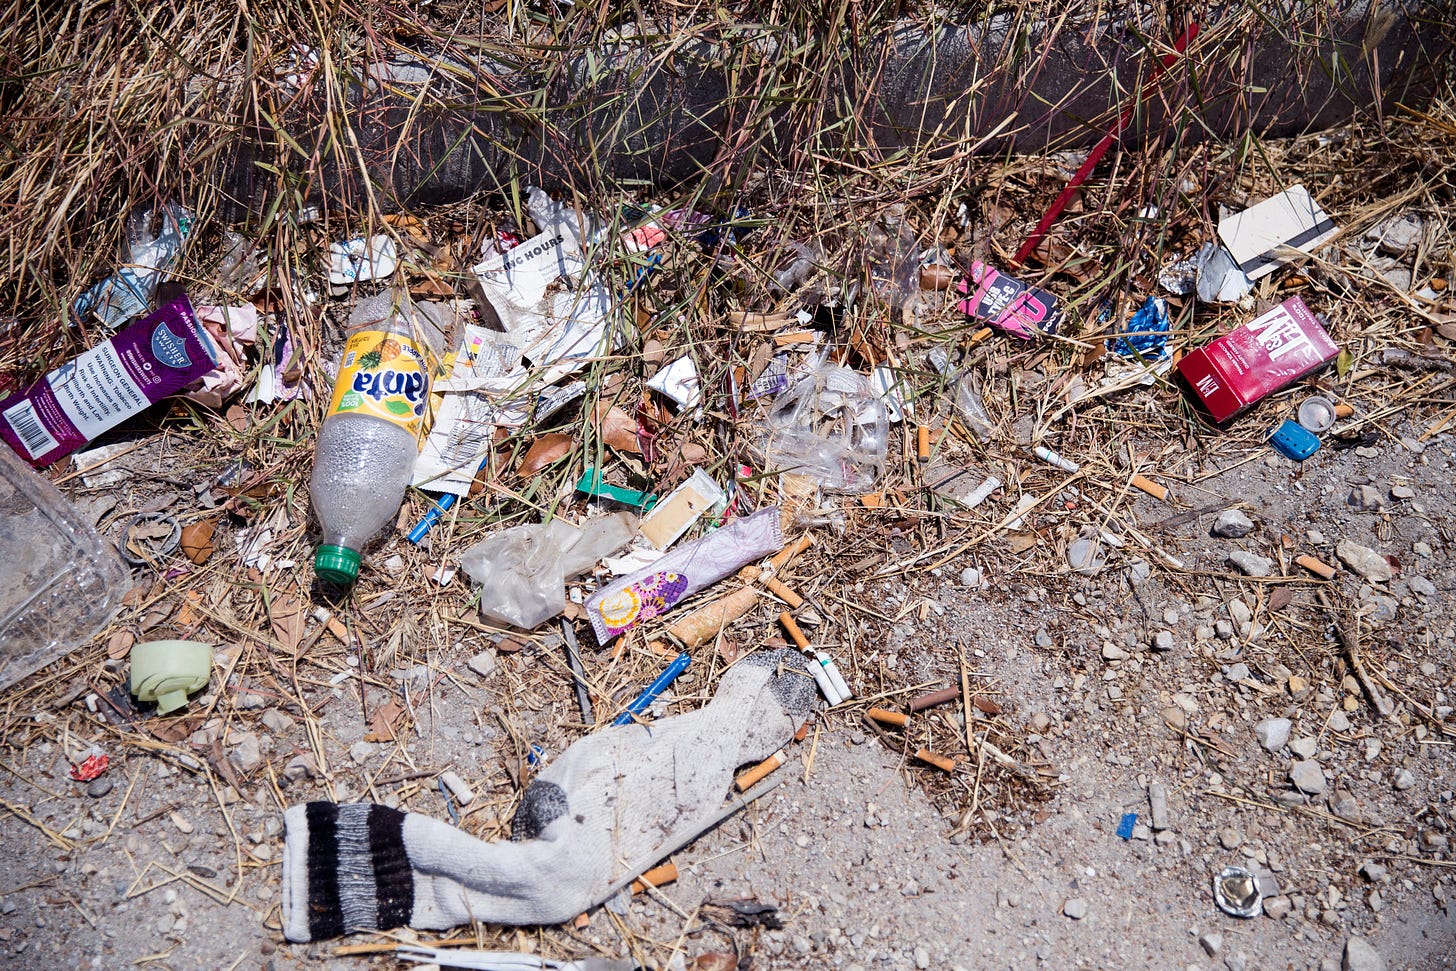 Corpus Christi businesses combat littering, illegal activity in Uptown